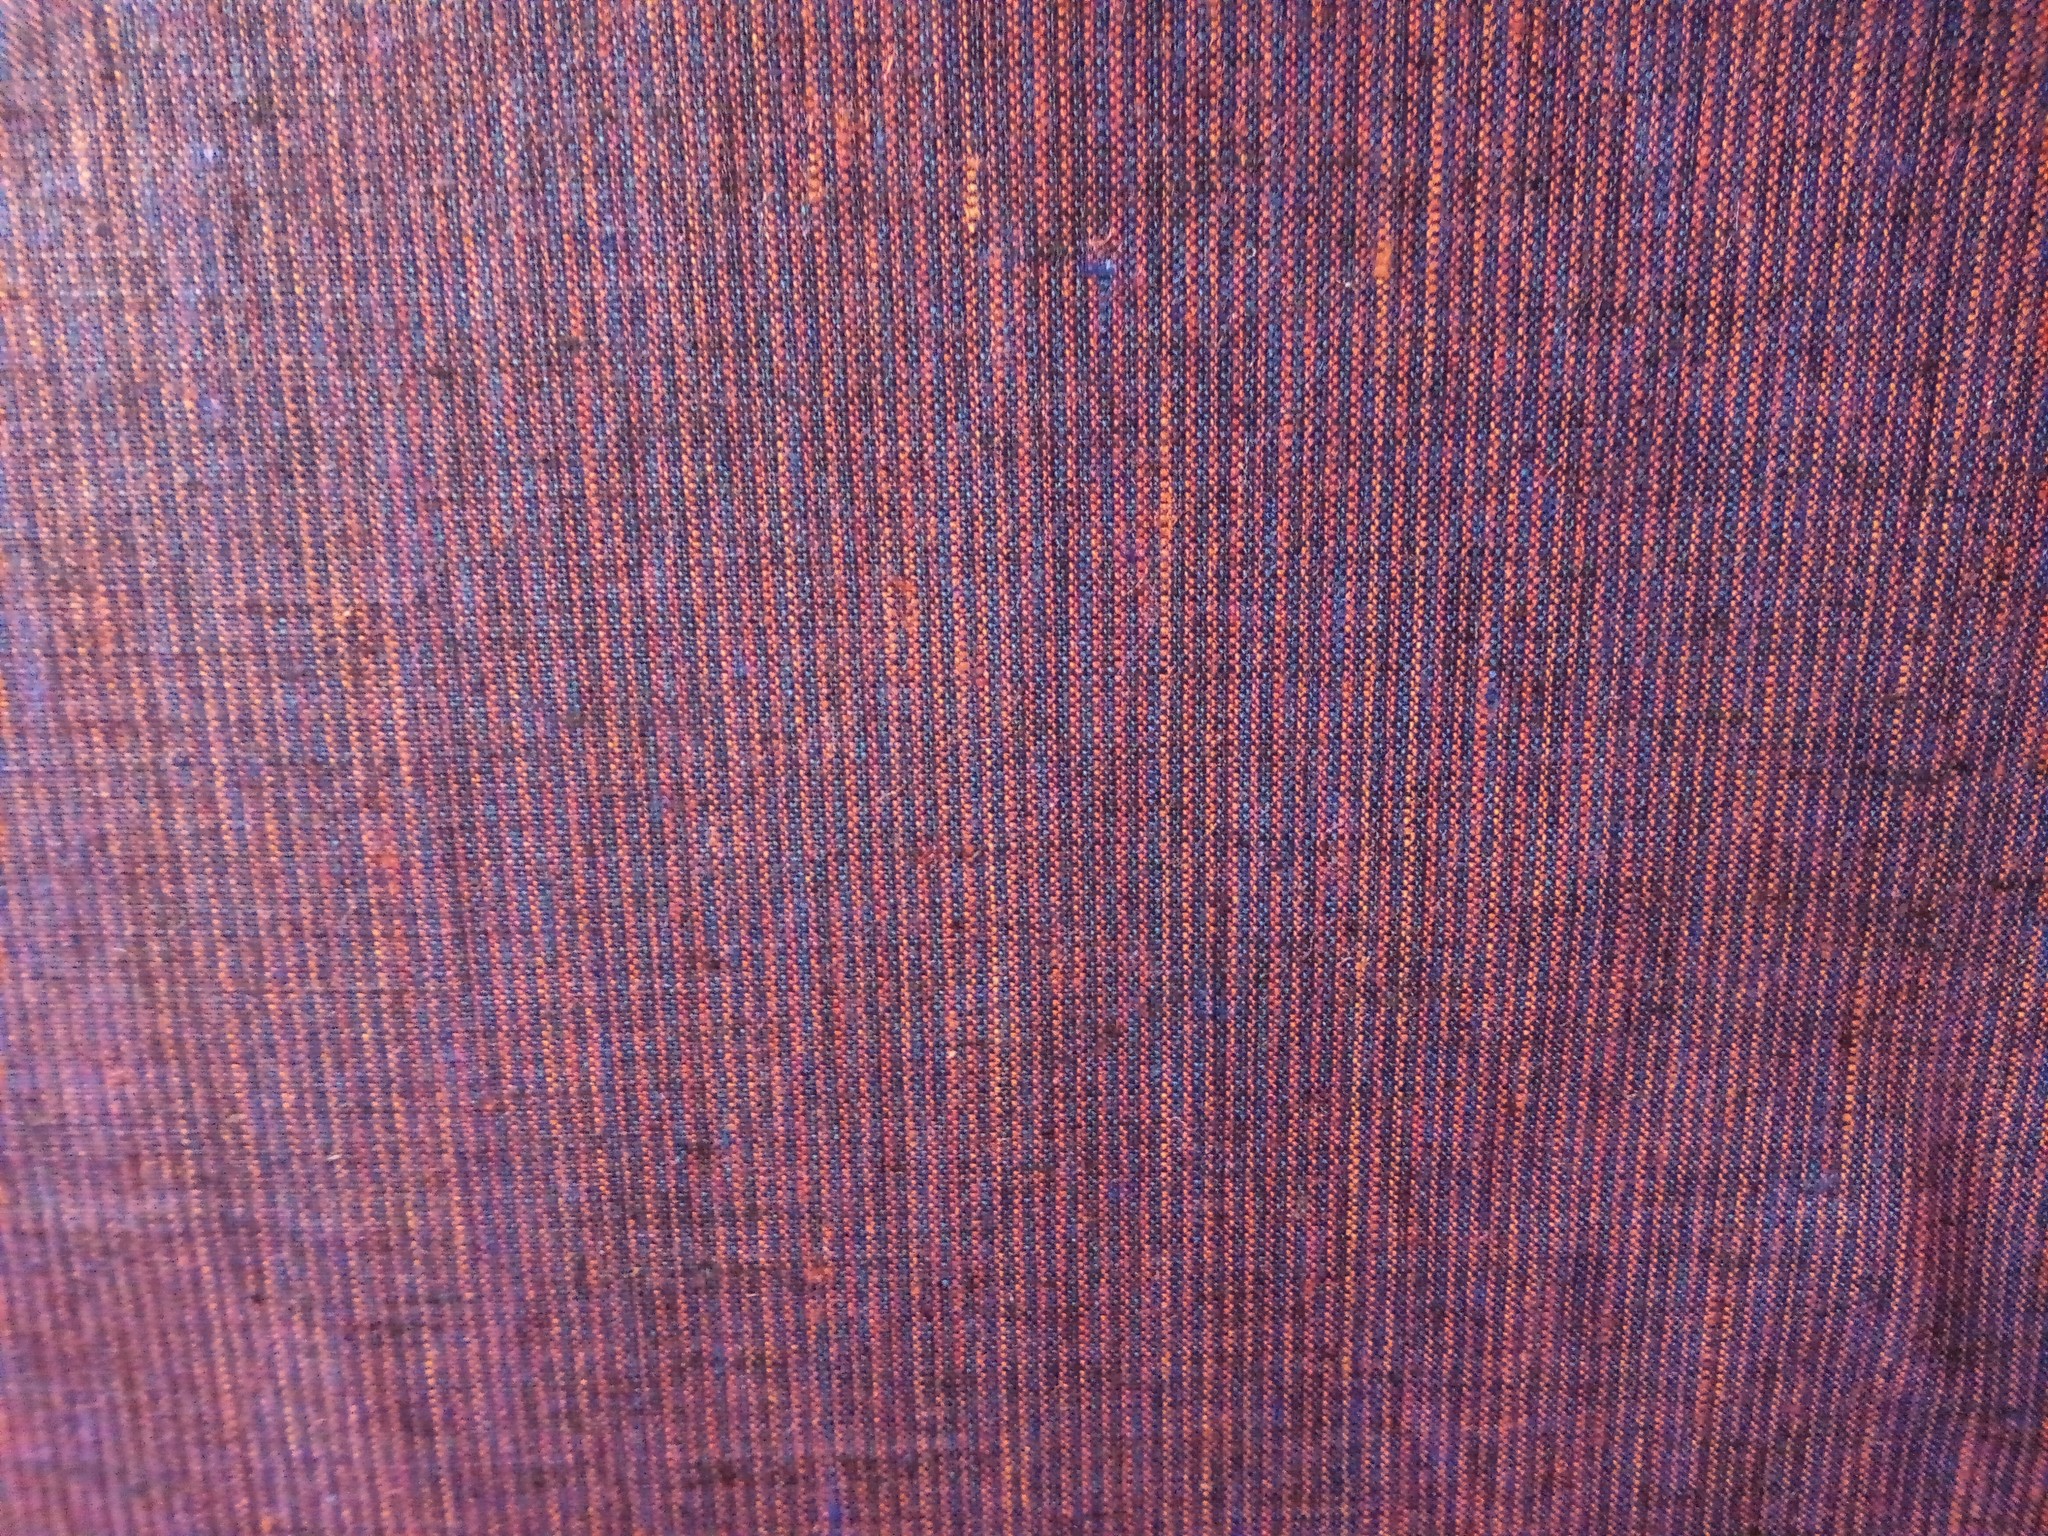 Rood en blauw gestreepte linnen stof